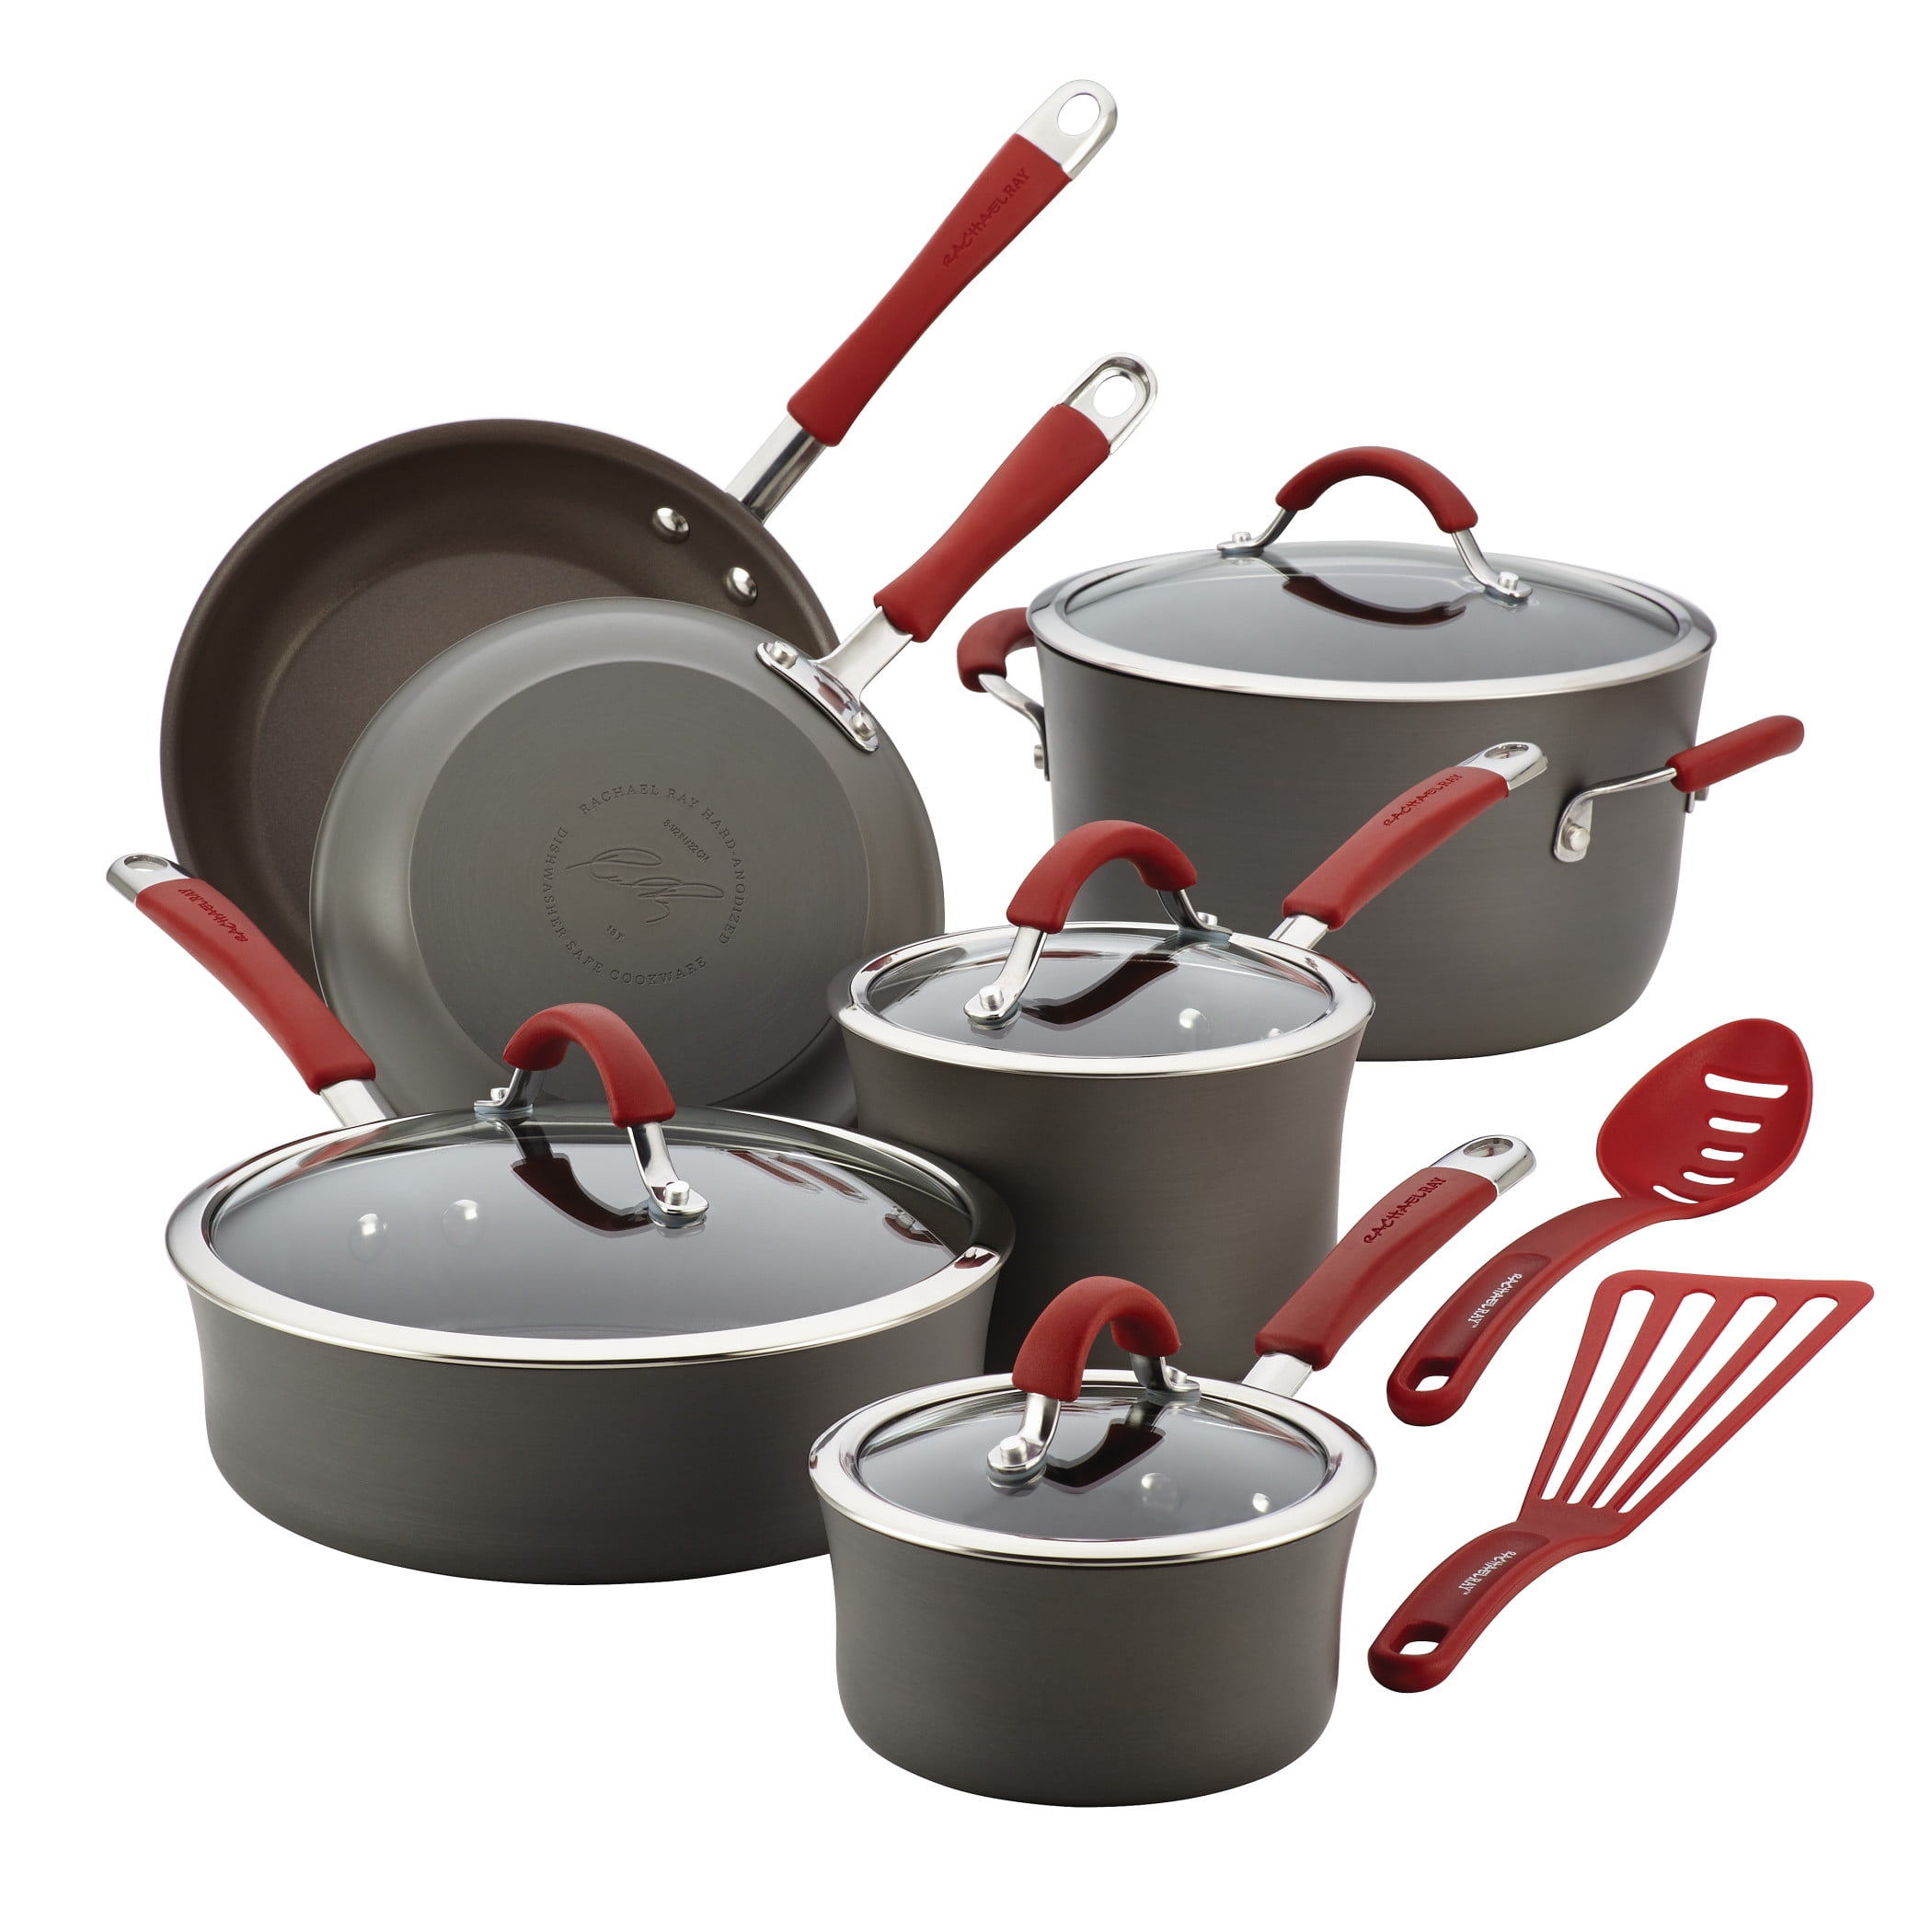 Details about   Rachael Ray 12-Piece Classic Brights Nonstick Pots Pans Set/Cookware Set#Z3B2 